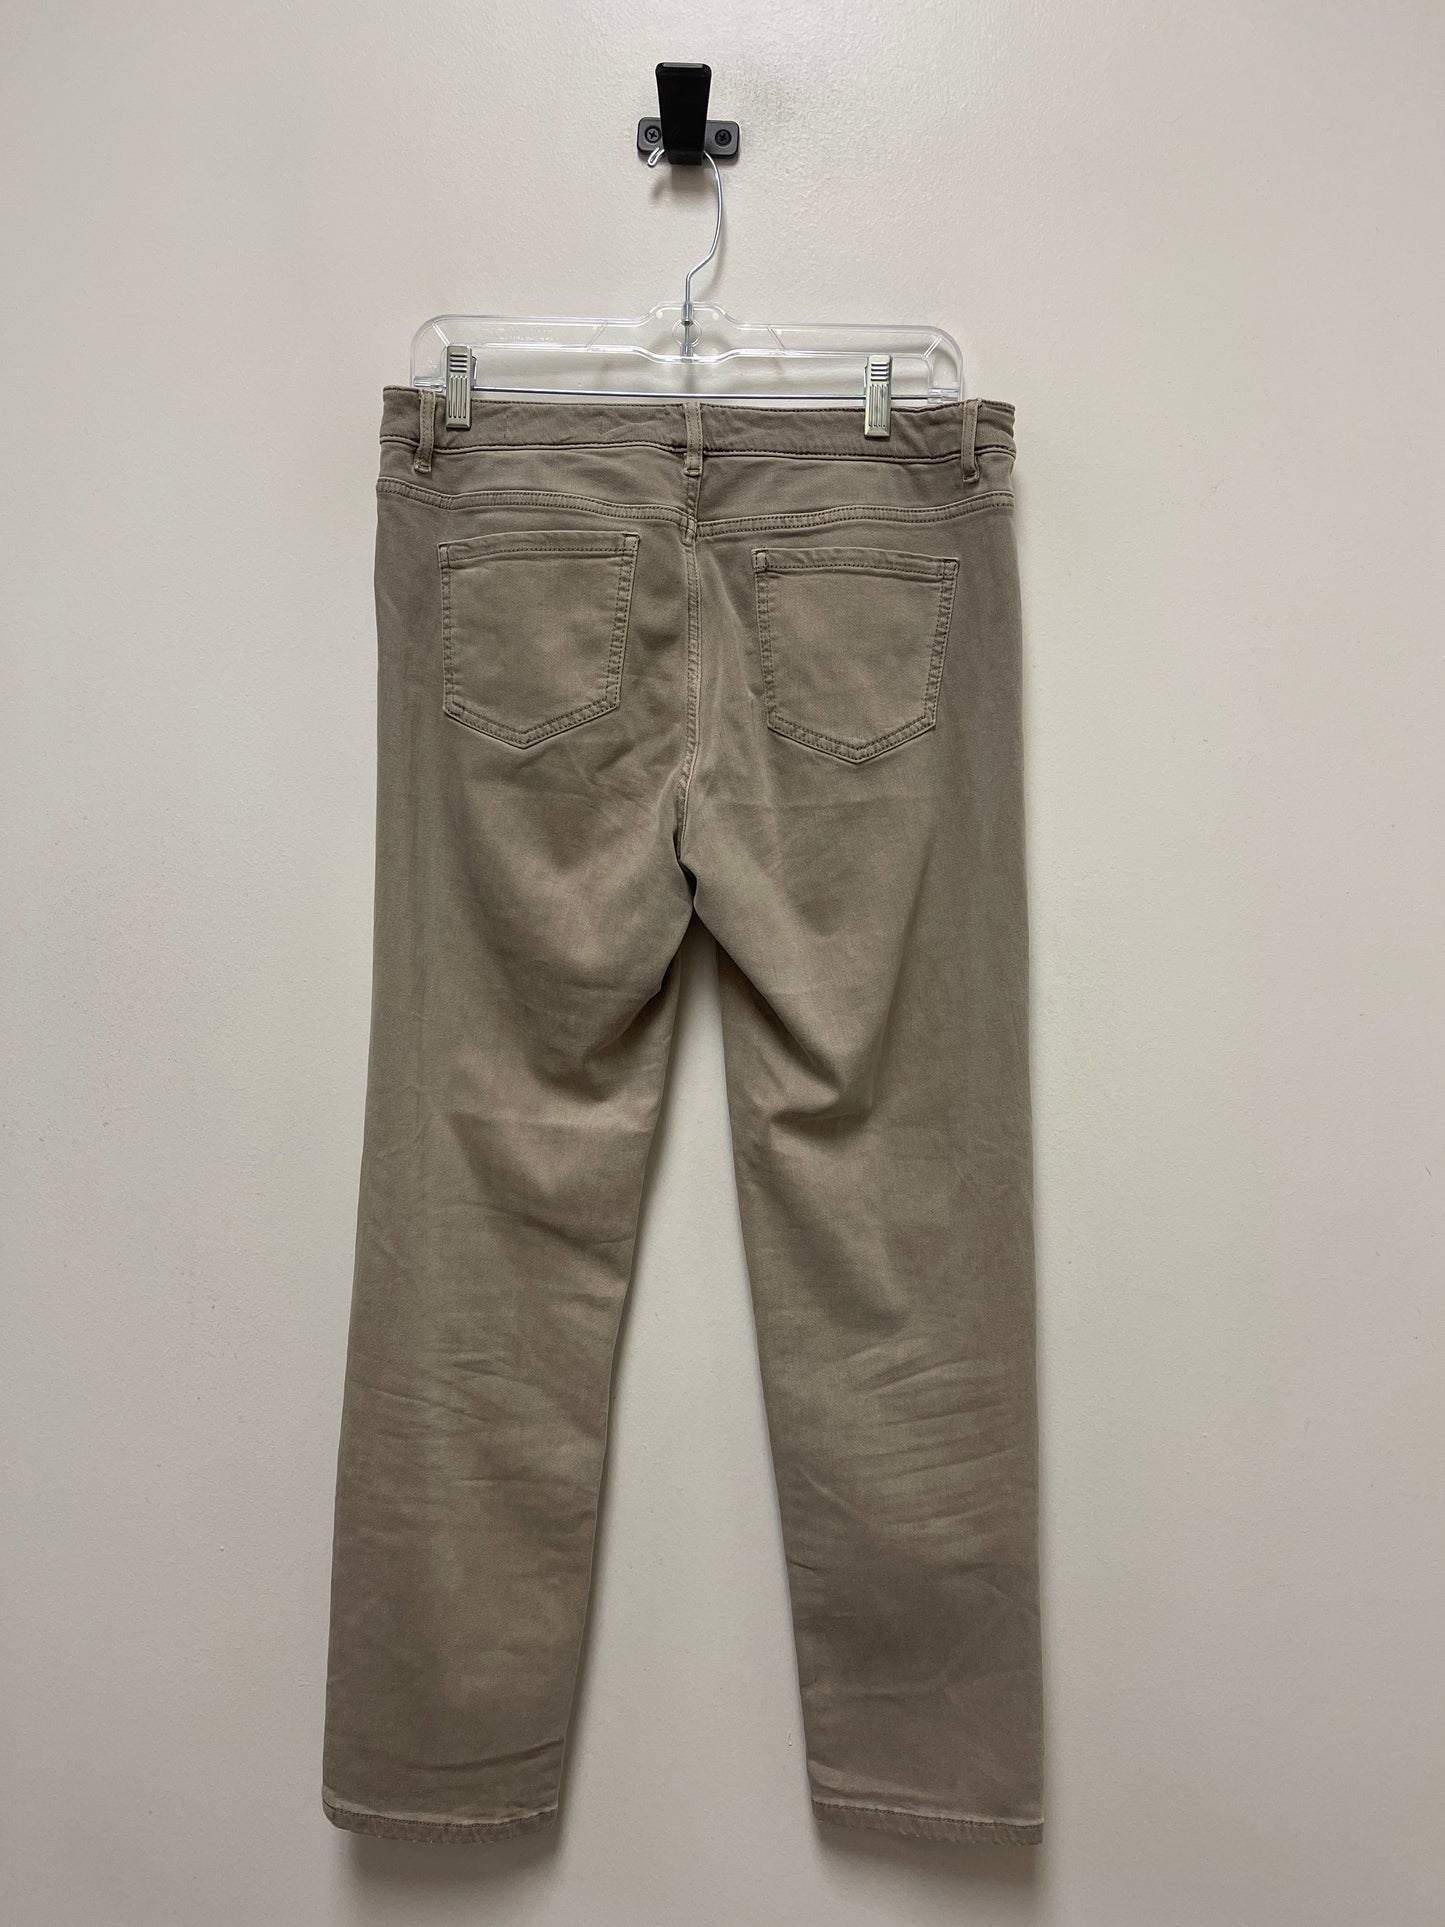 Jeans Straight By J. Jill  Size: 8petite